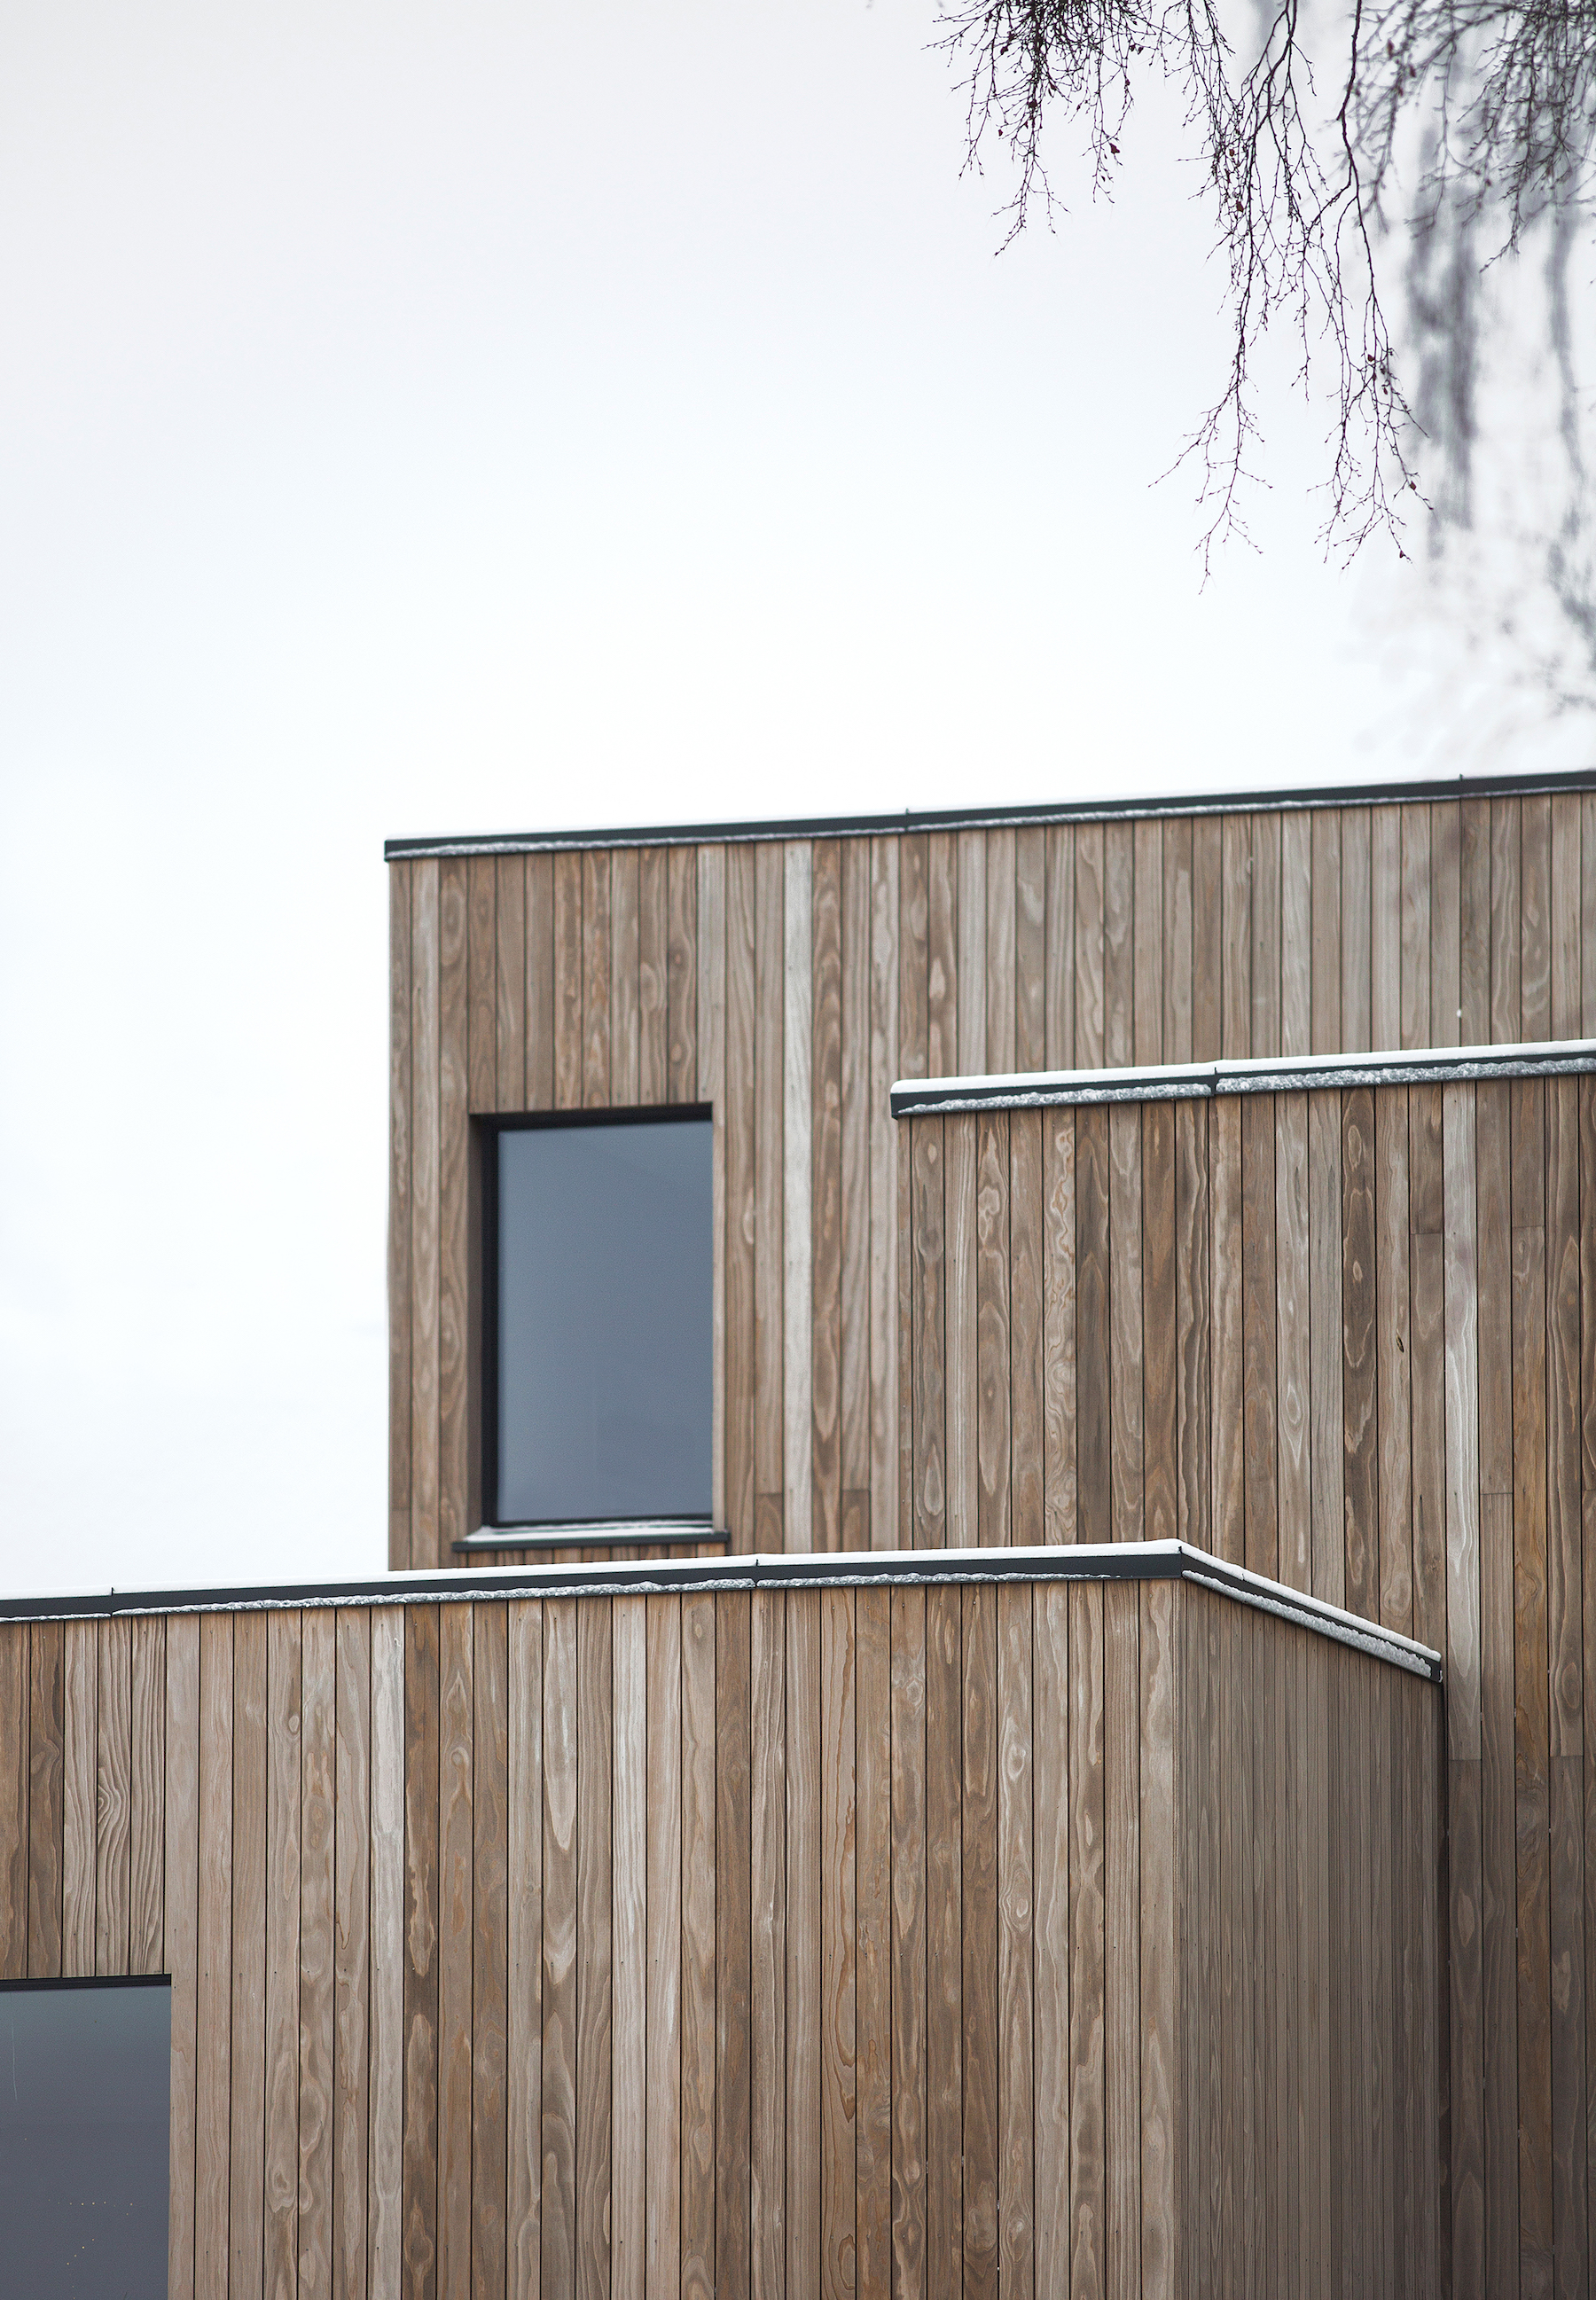 The Gjøvik House by Norm Architects